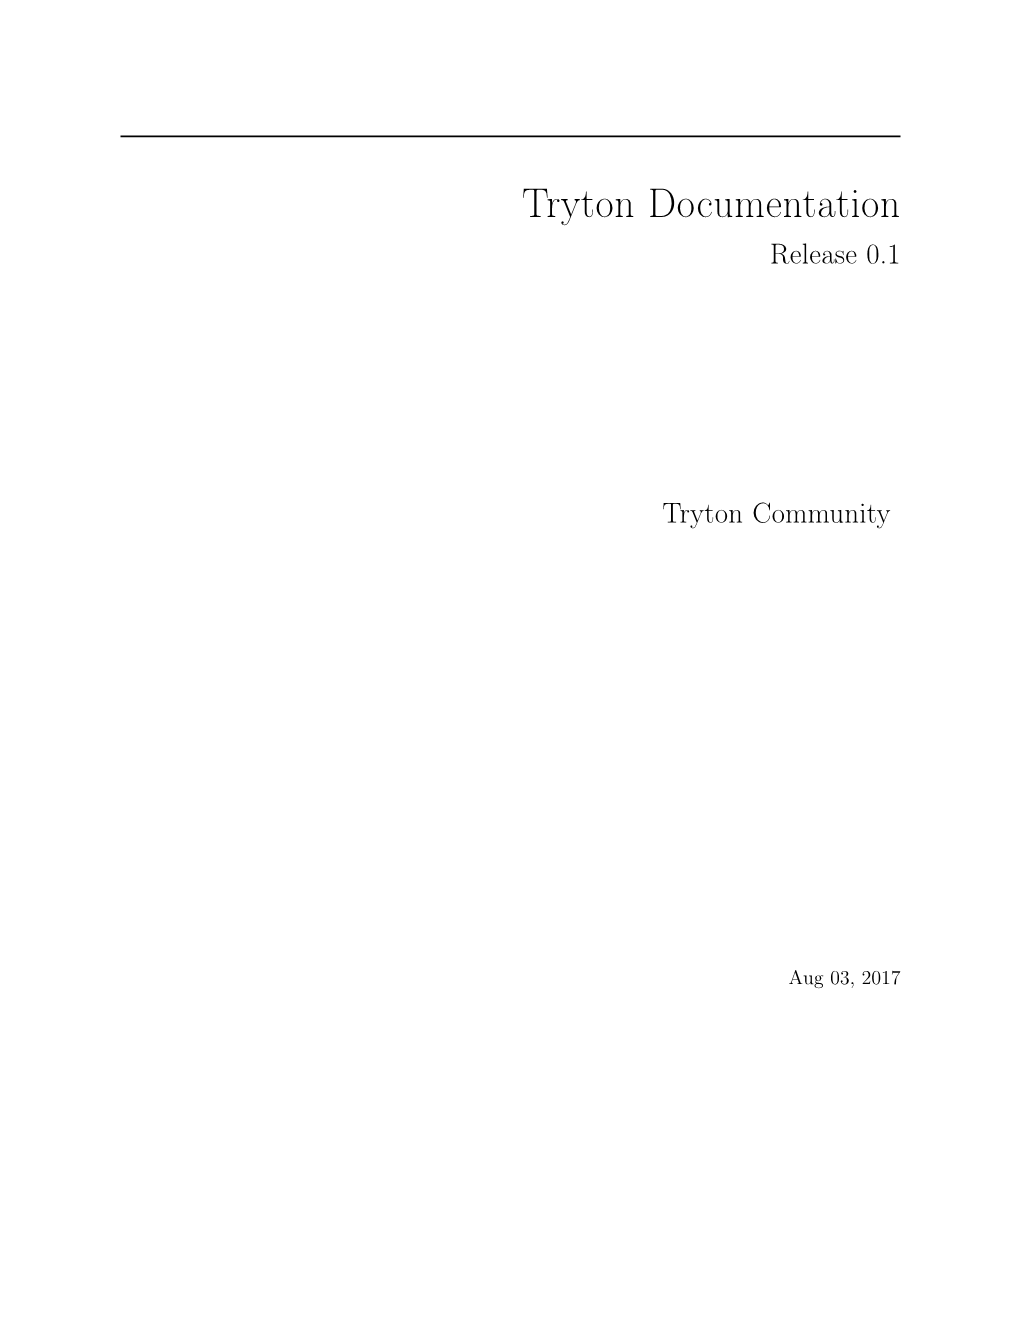 Tryton Documentation Release 0.1